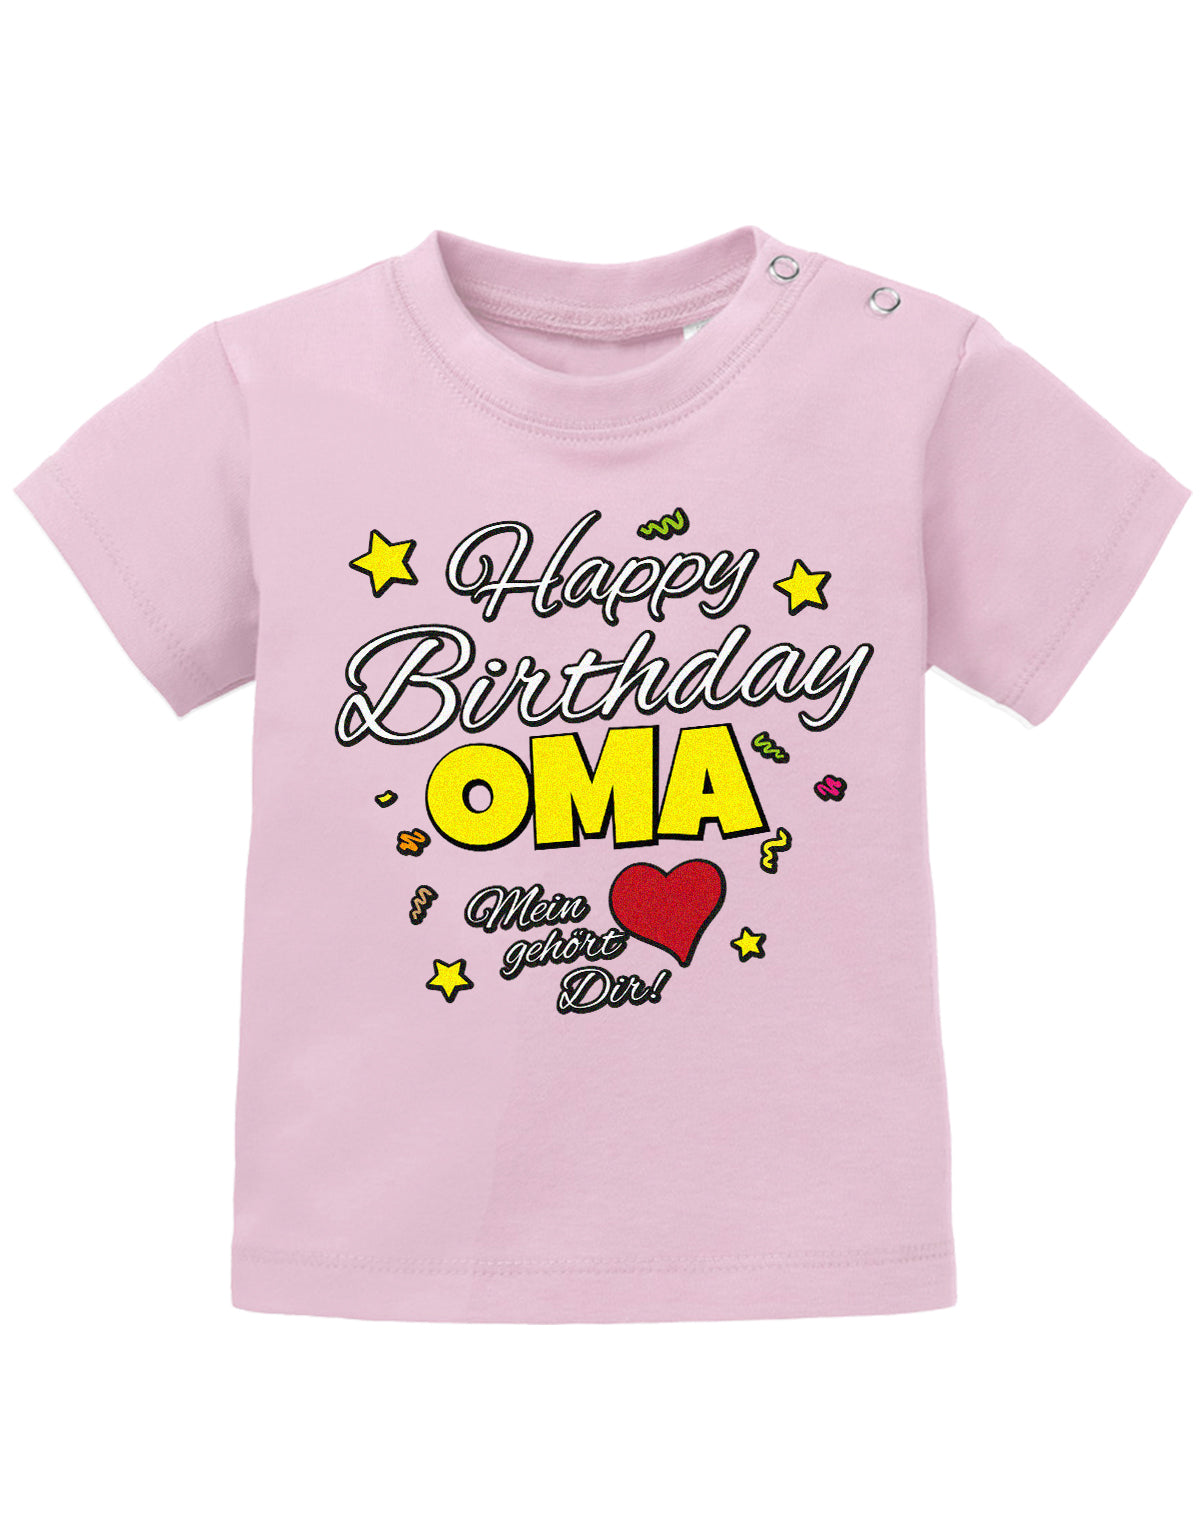 Oma Spruch Baby Shirt. Happy Birthday Oma, Mein Herz gehört dir. Rosa